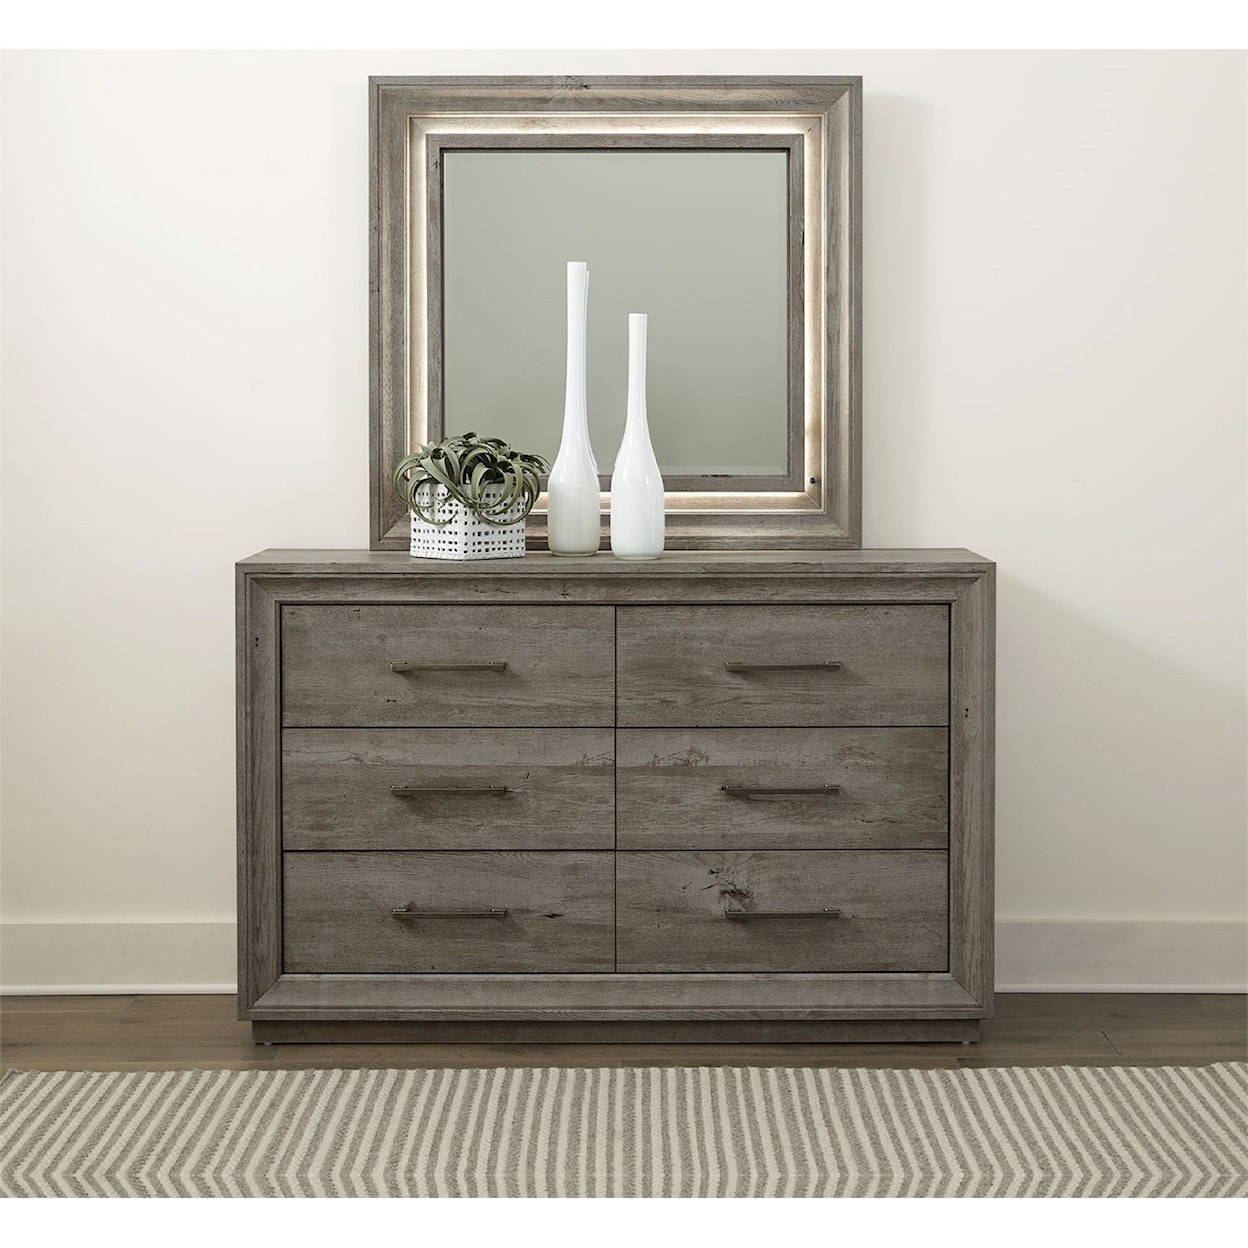 Liberty Furniture Horizons Dresser & Mirror